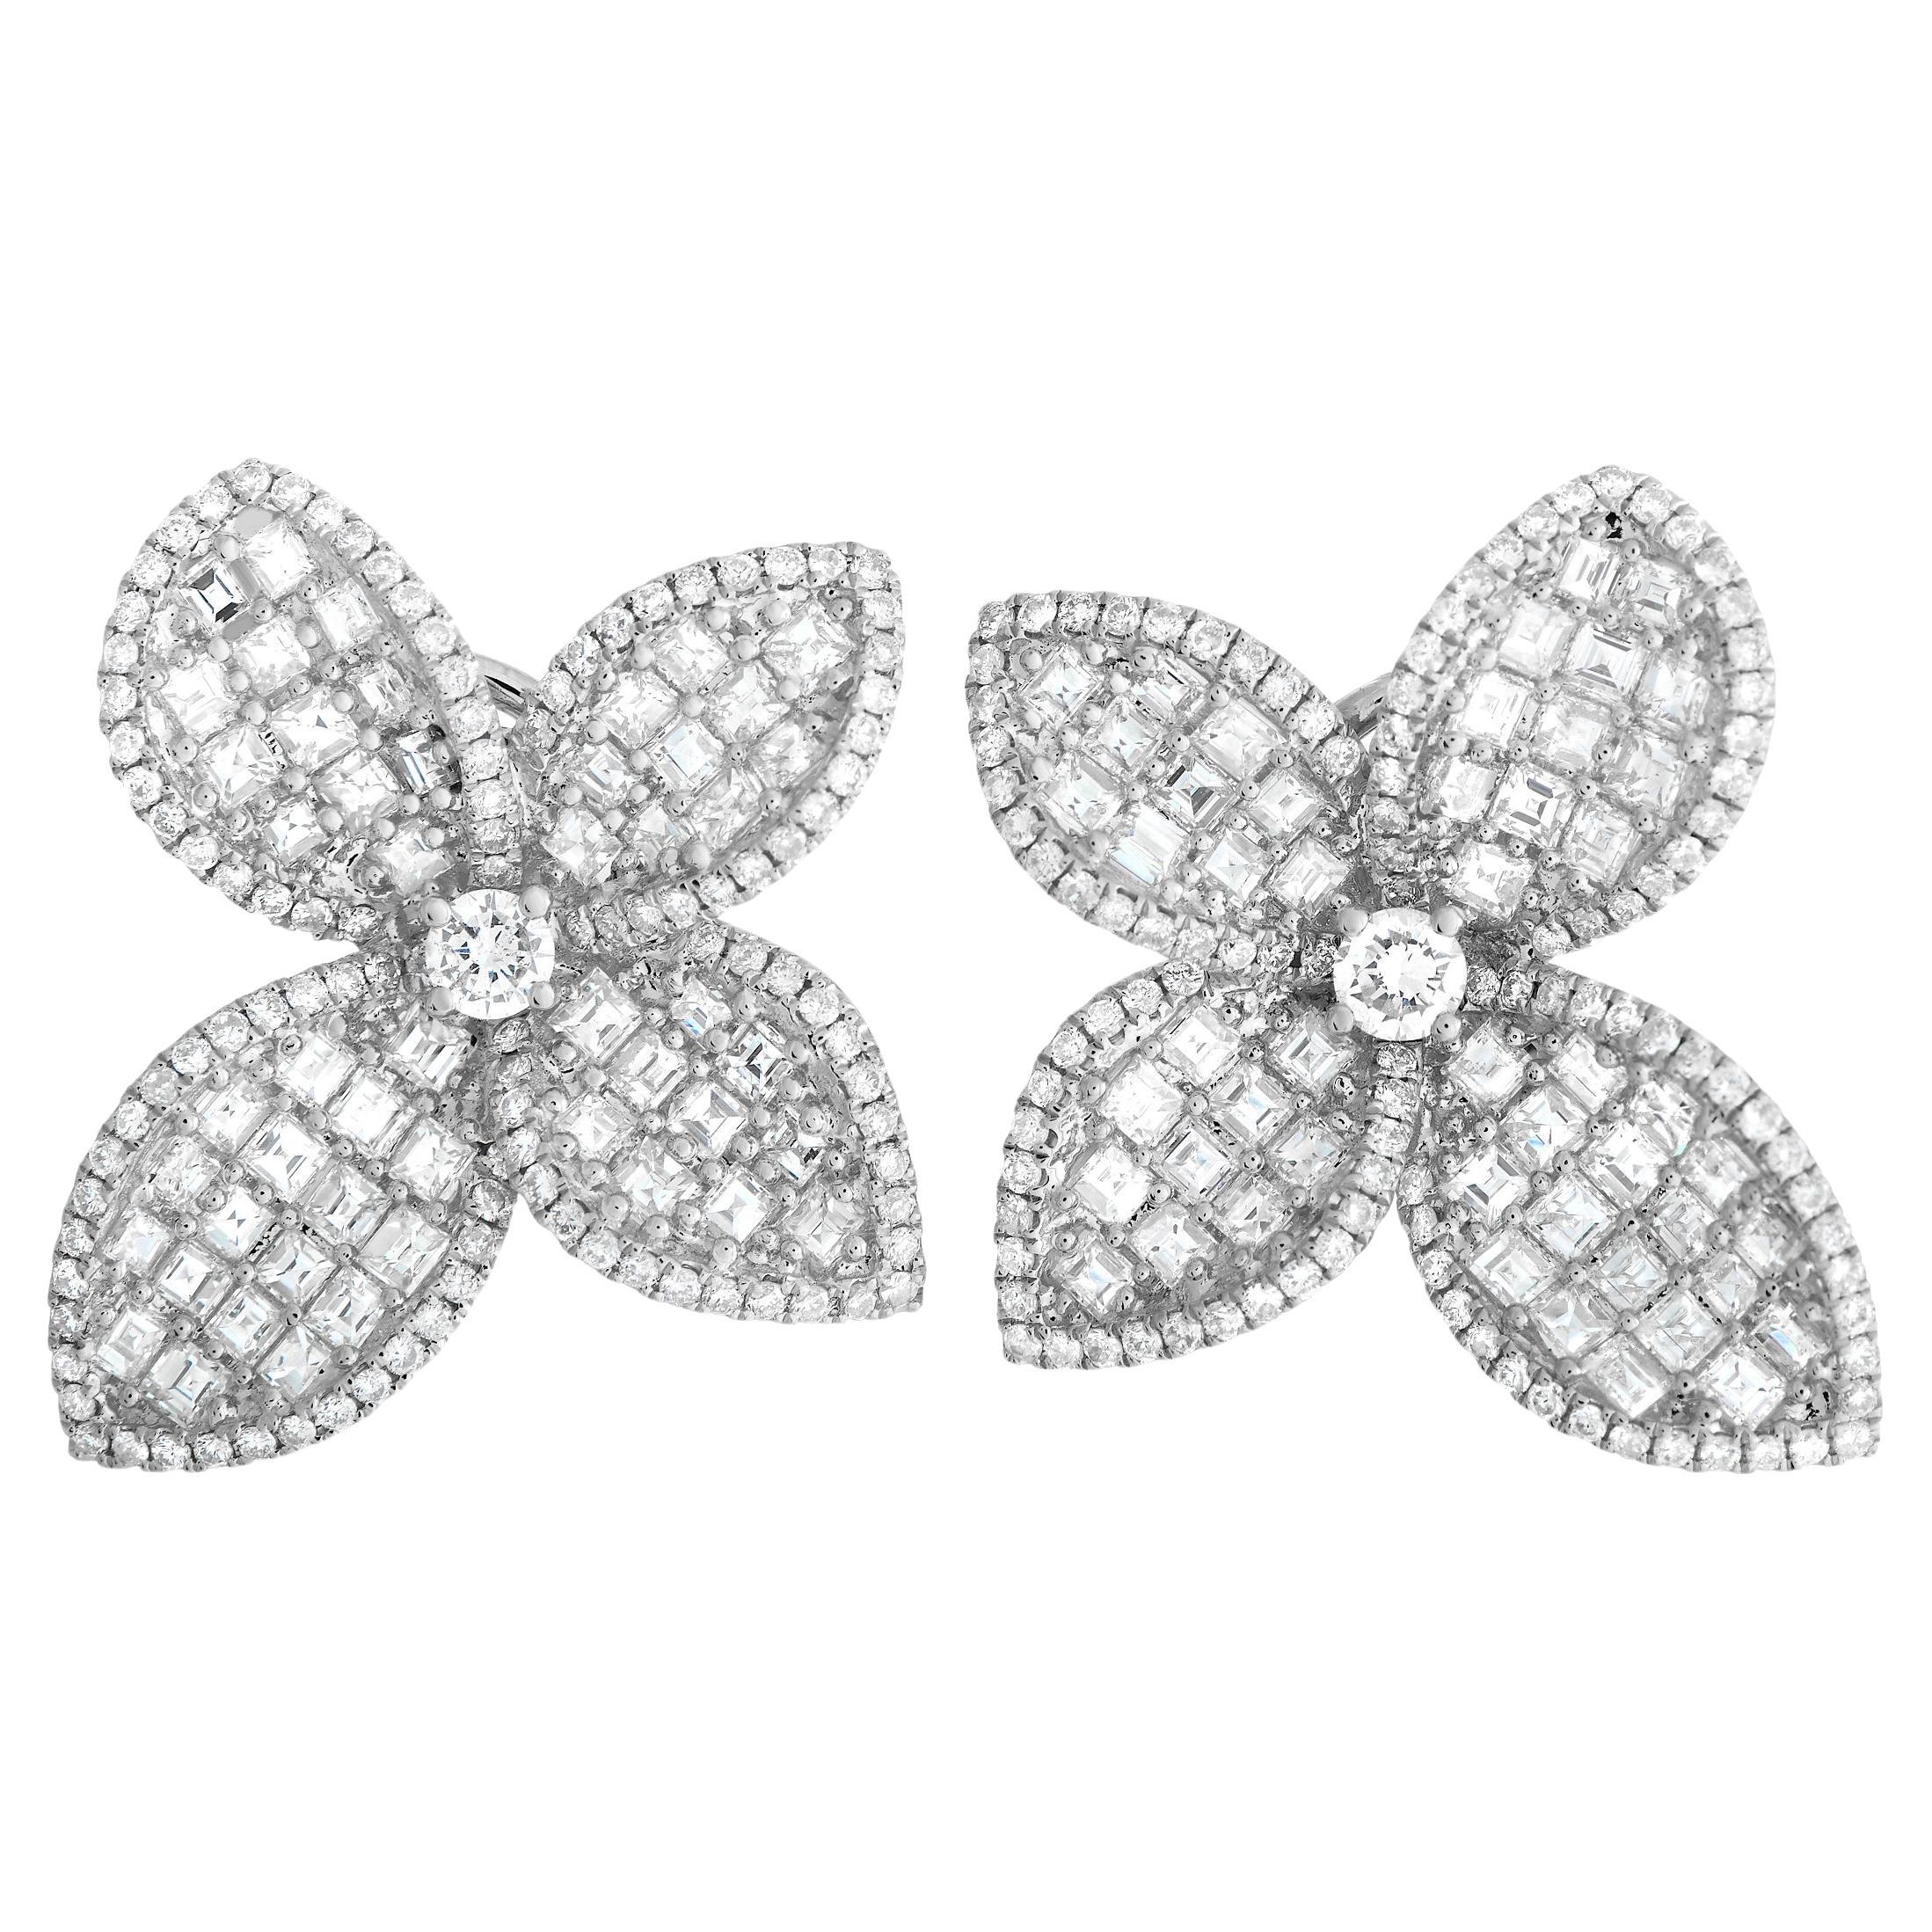 LB Exclusive 18K White Gold 4.95ct Diamond Flower Earrings